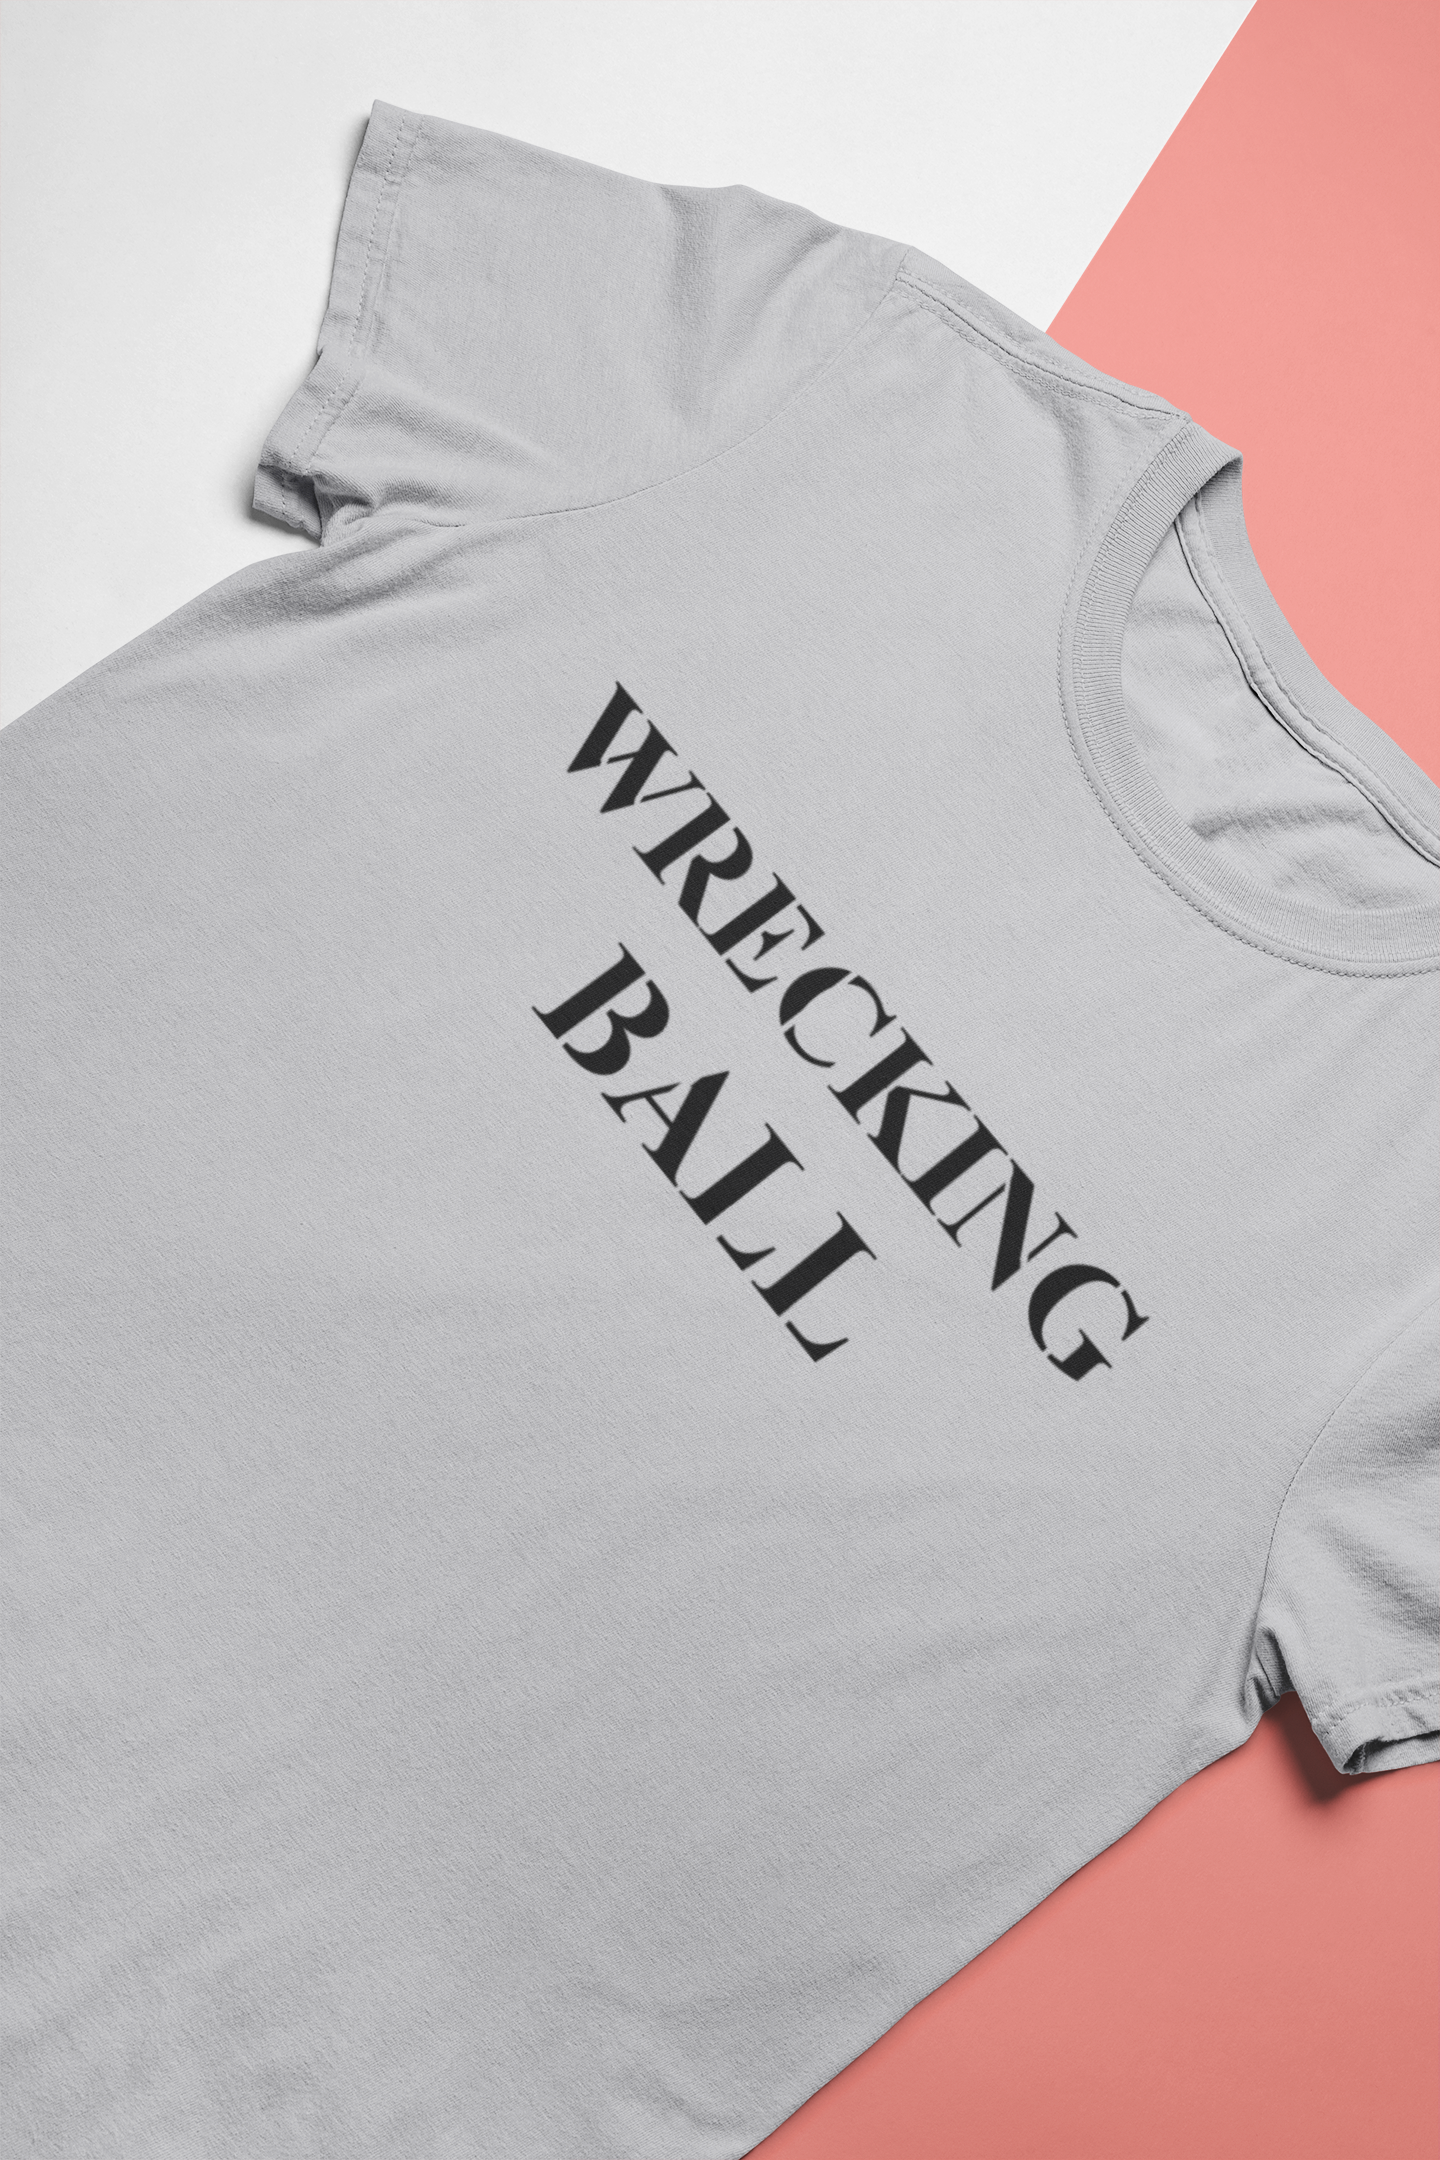 Wrecking Ball Miley Cyrus Celebrity T-shirt- FunkyTeesClub